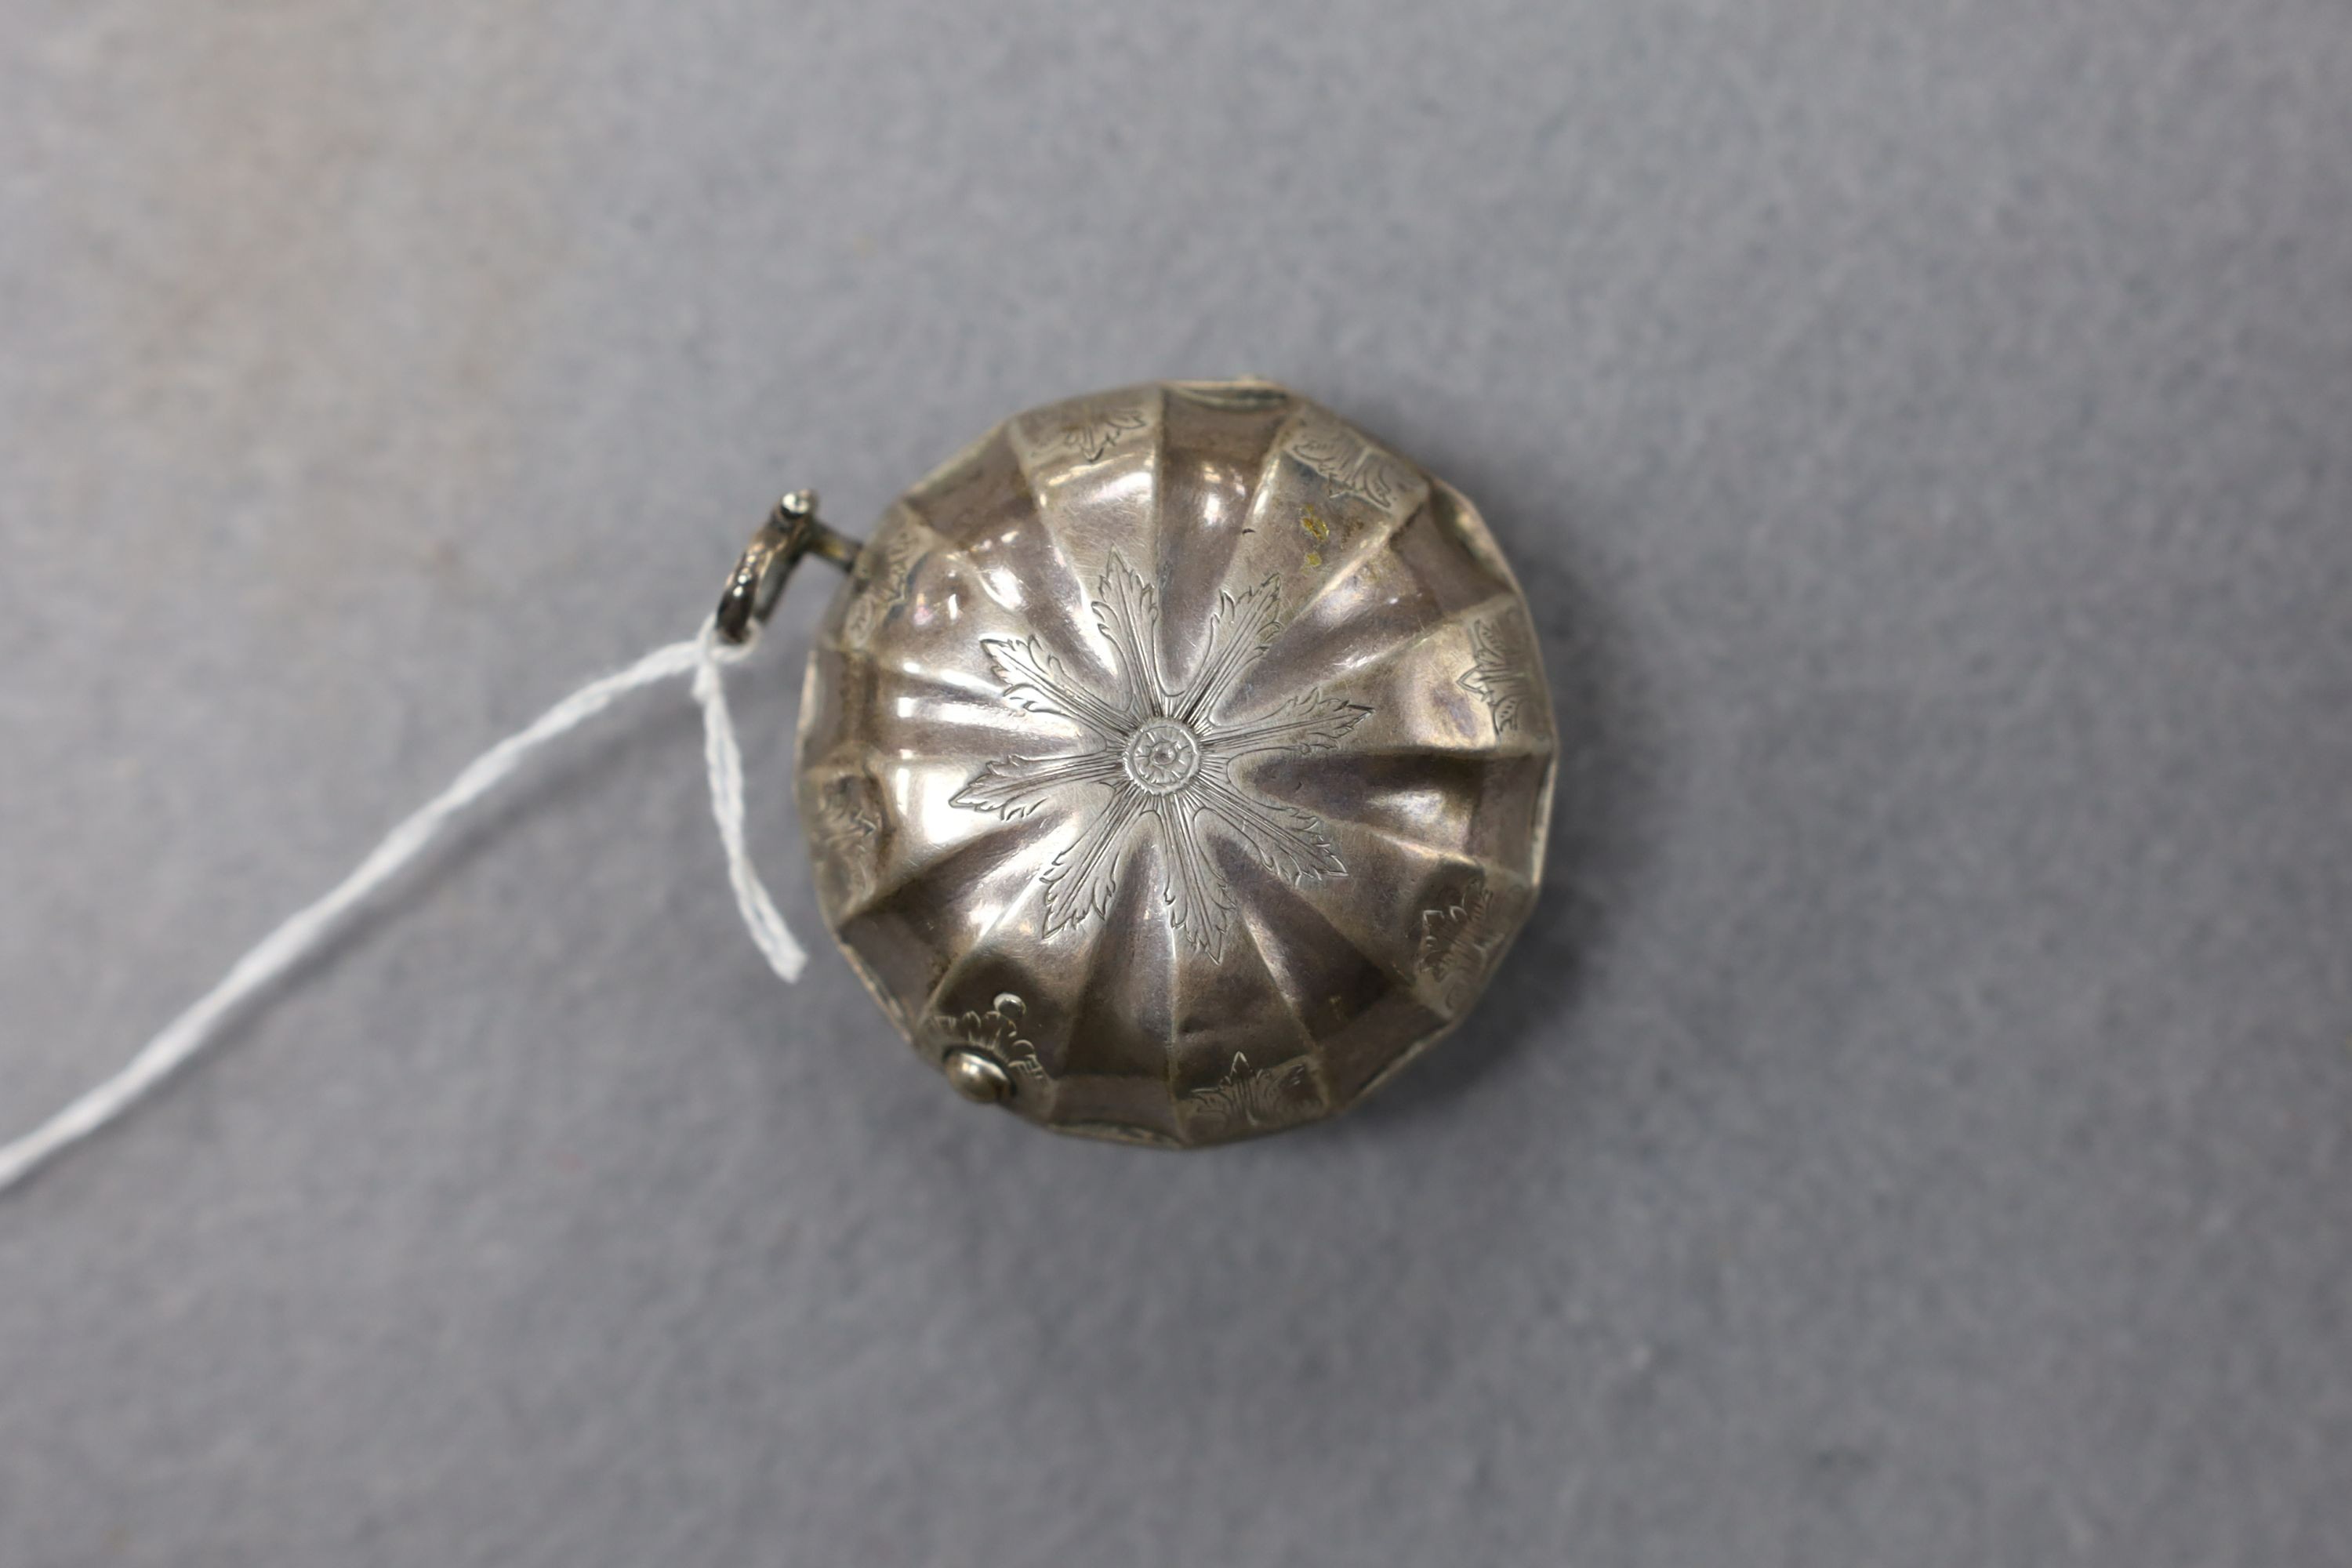 An 18th century white metal pair cased keywind verge pocket watch, by Isaac Soret, cased diameter 51mm